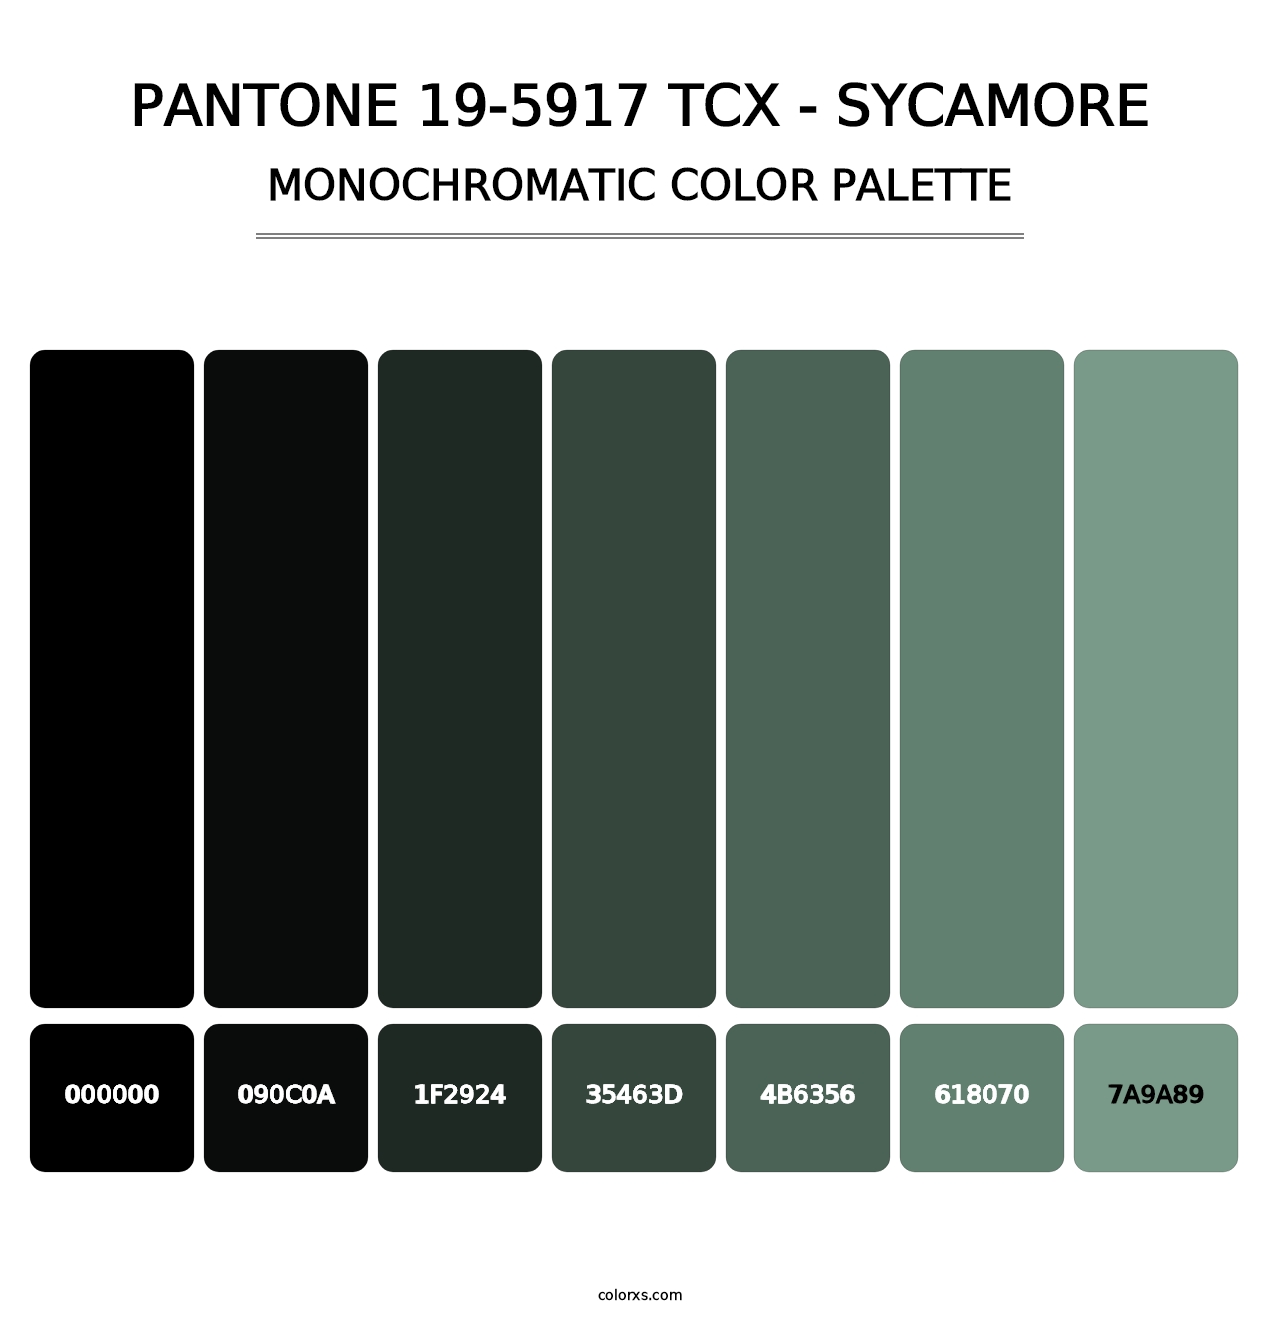 PANTONE 19-5917 TCX - Sycamore - Monochromatic Color Palette